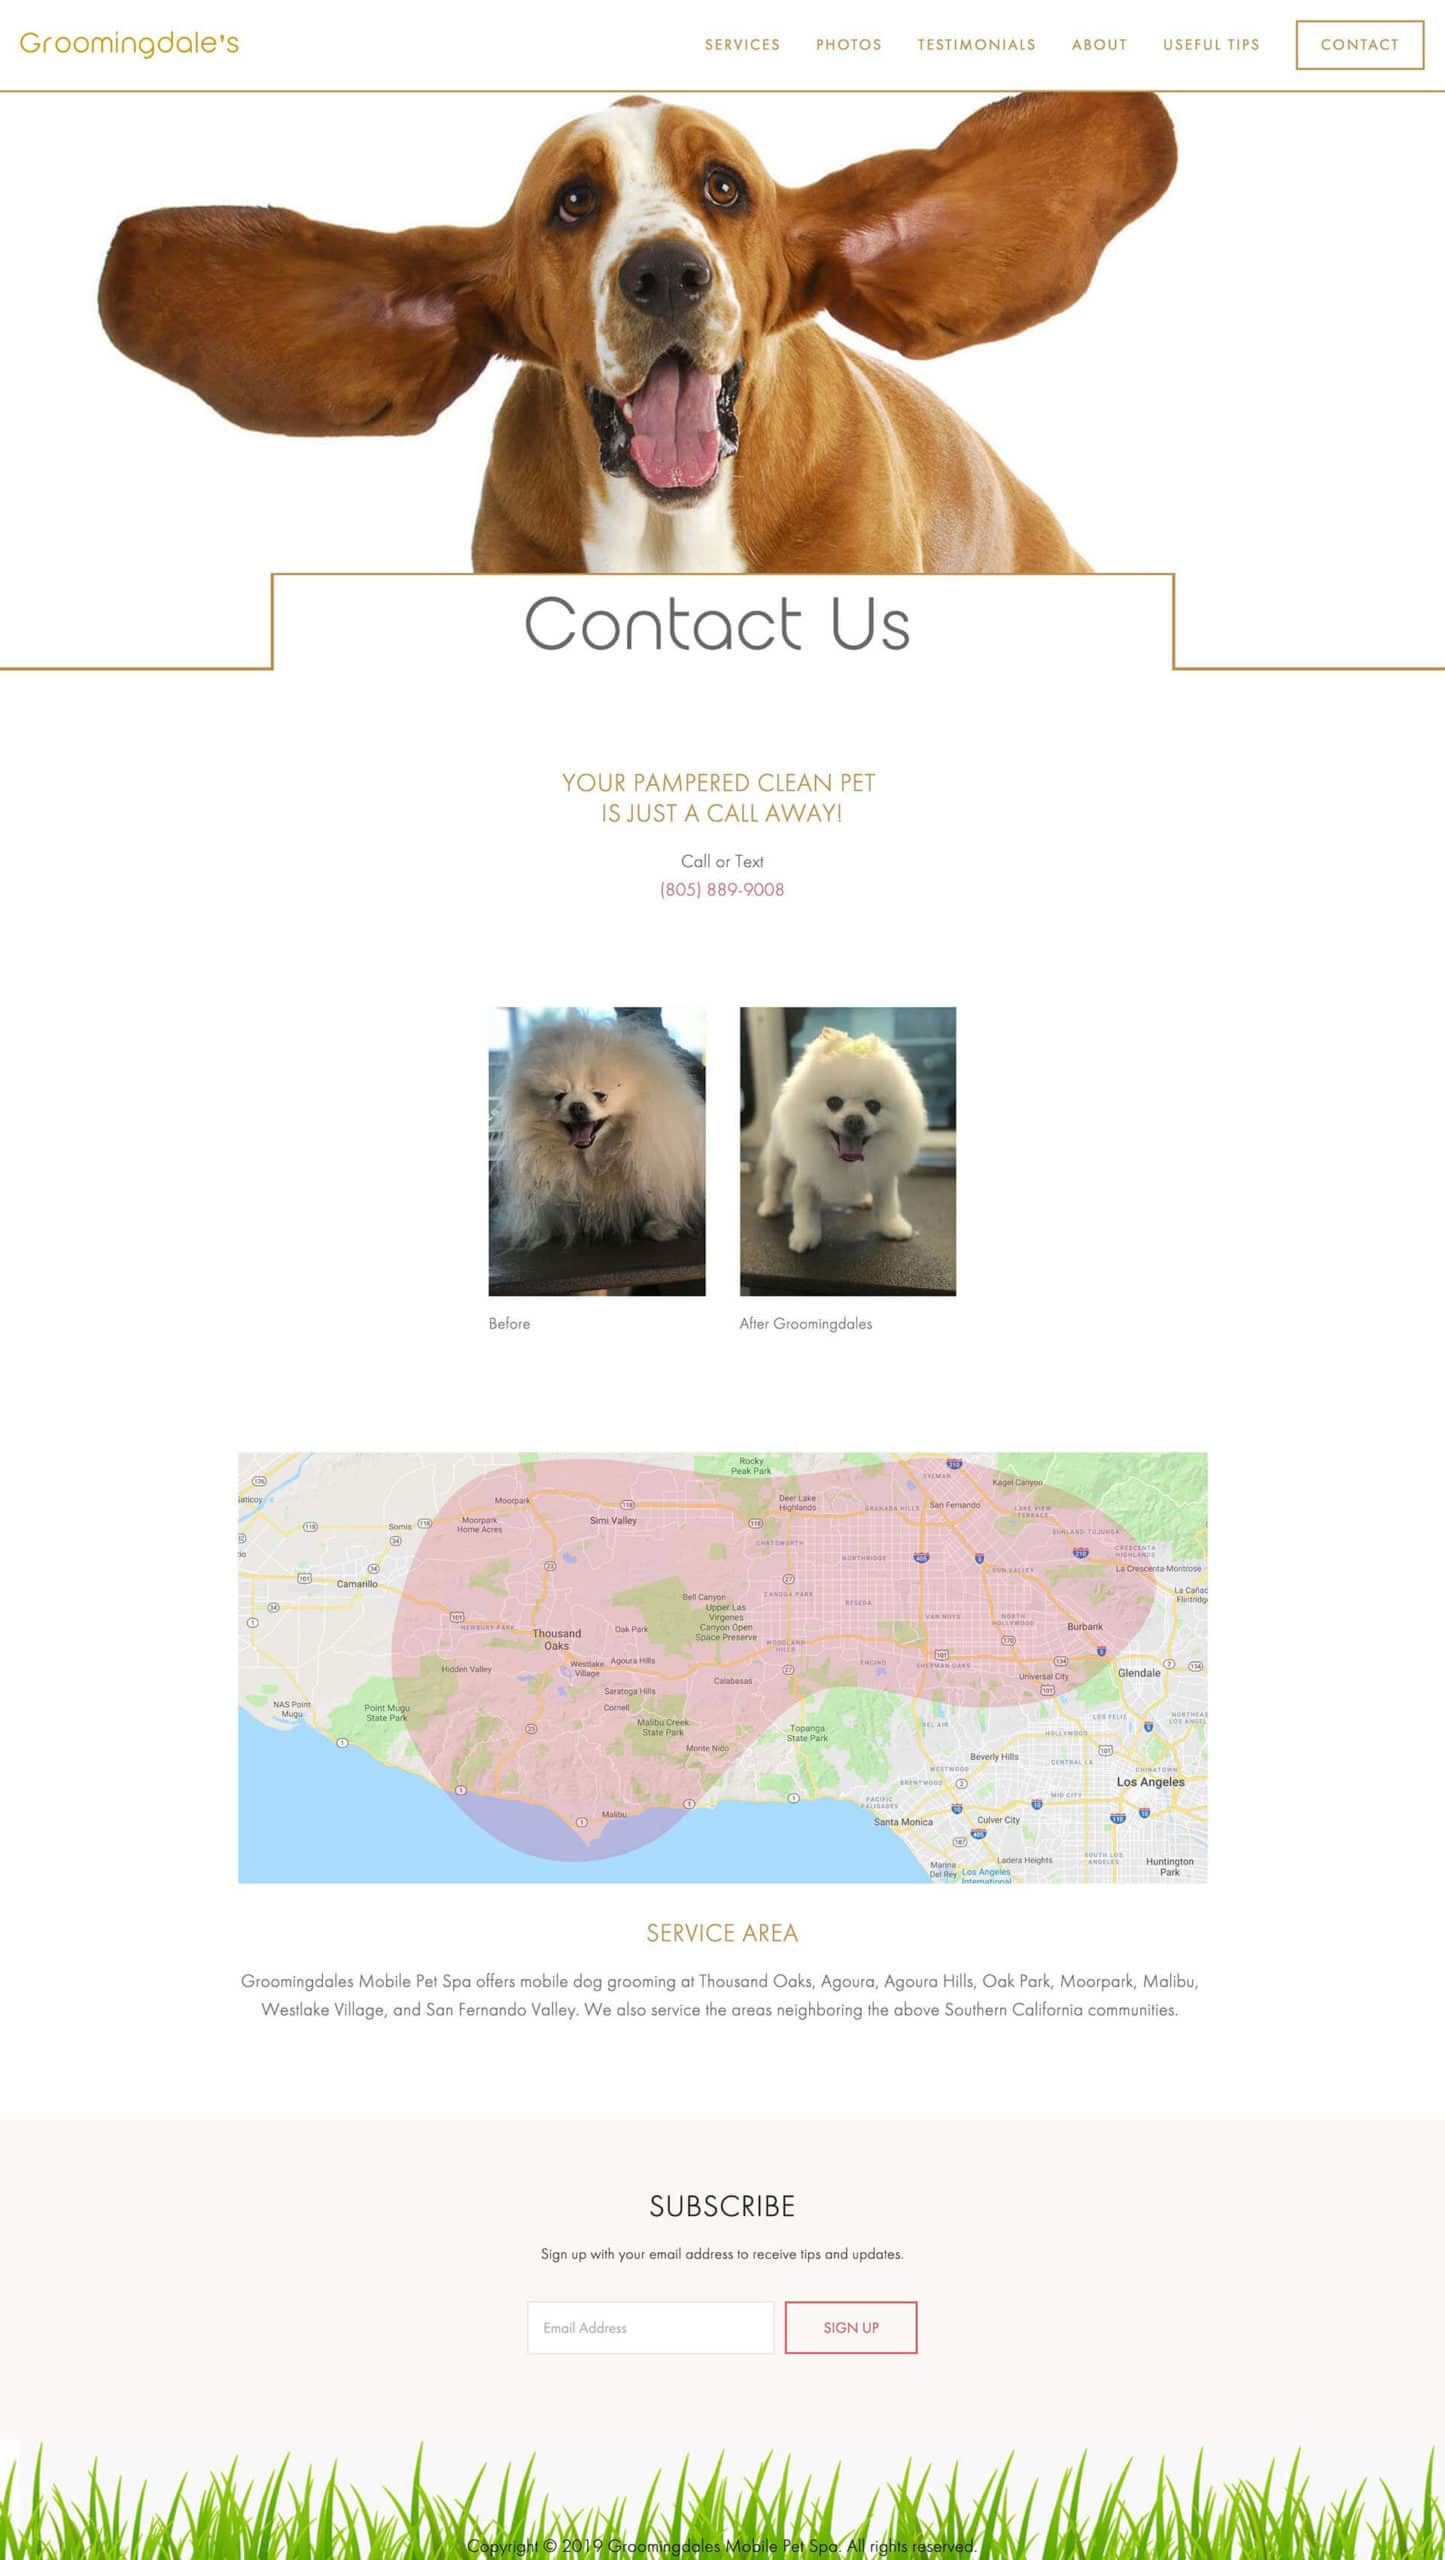 Groomingdales contact page